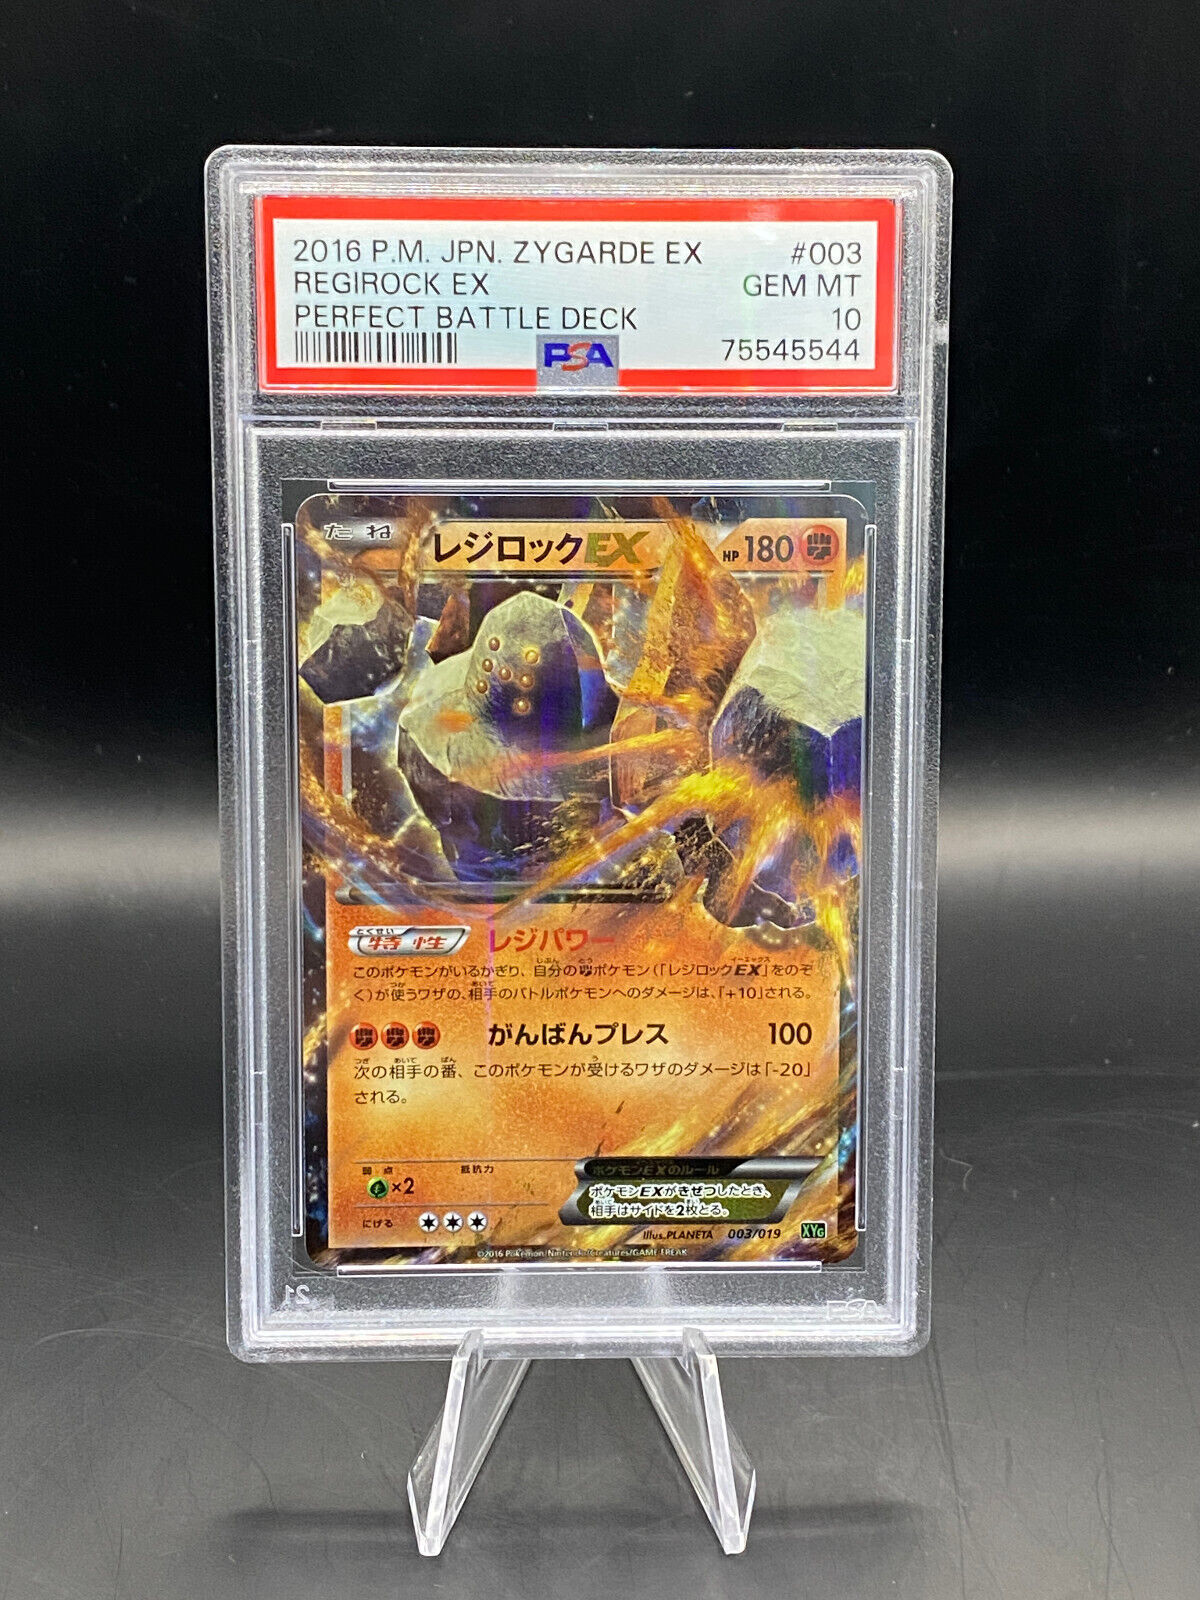 PSA 10 LOW POP Regirock EX #003/019 Perfect Battle Deck Japanese Pokemon Card